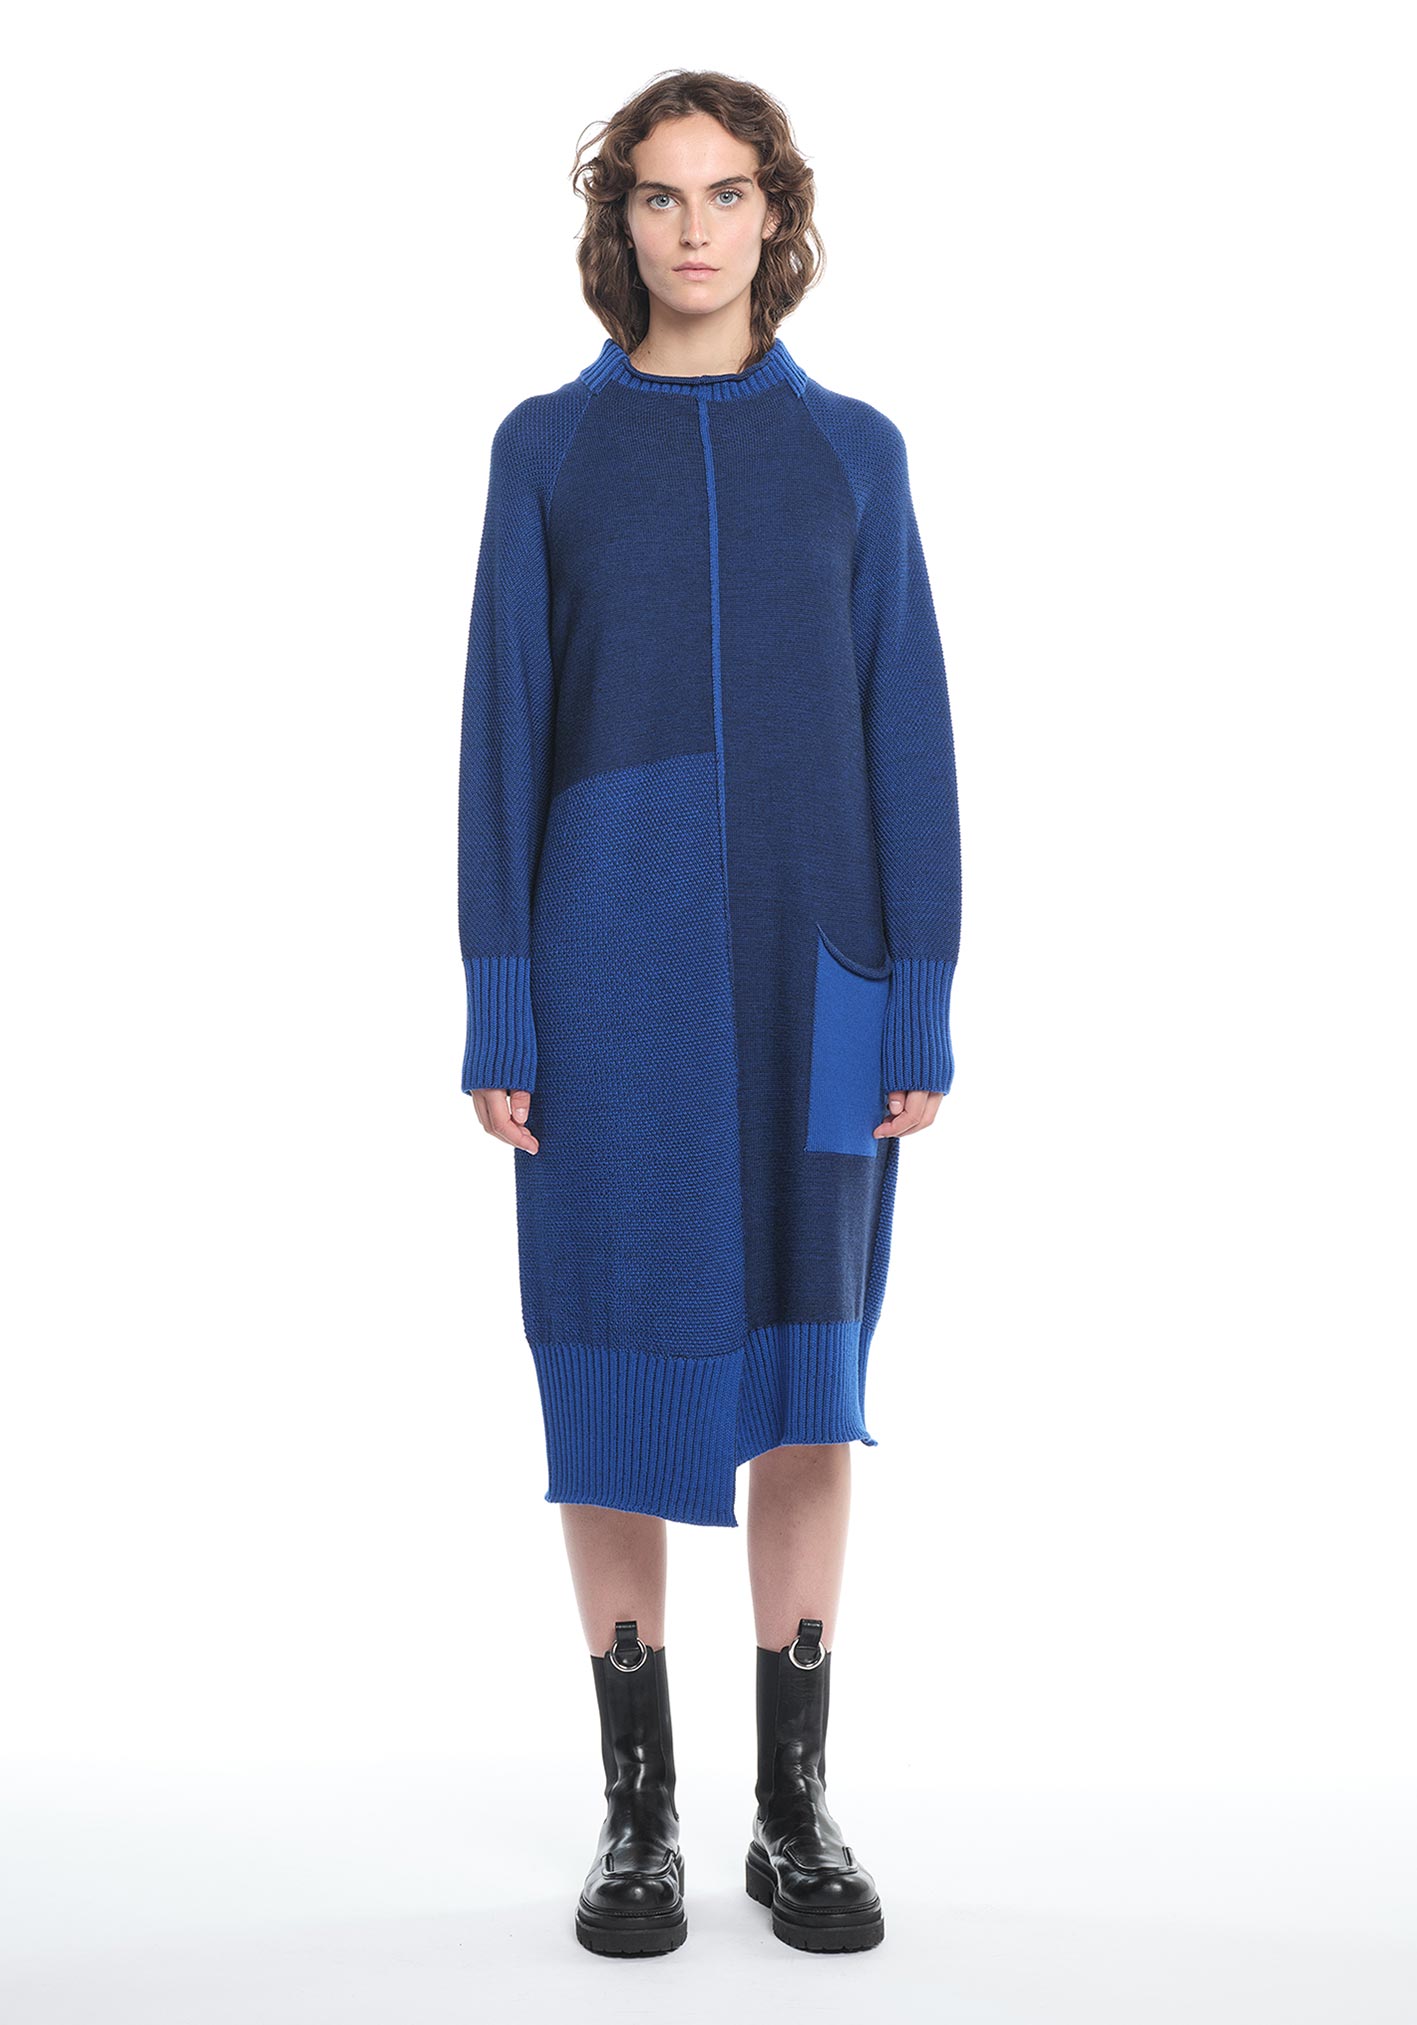 buy the latest Geometro Dress online